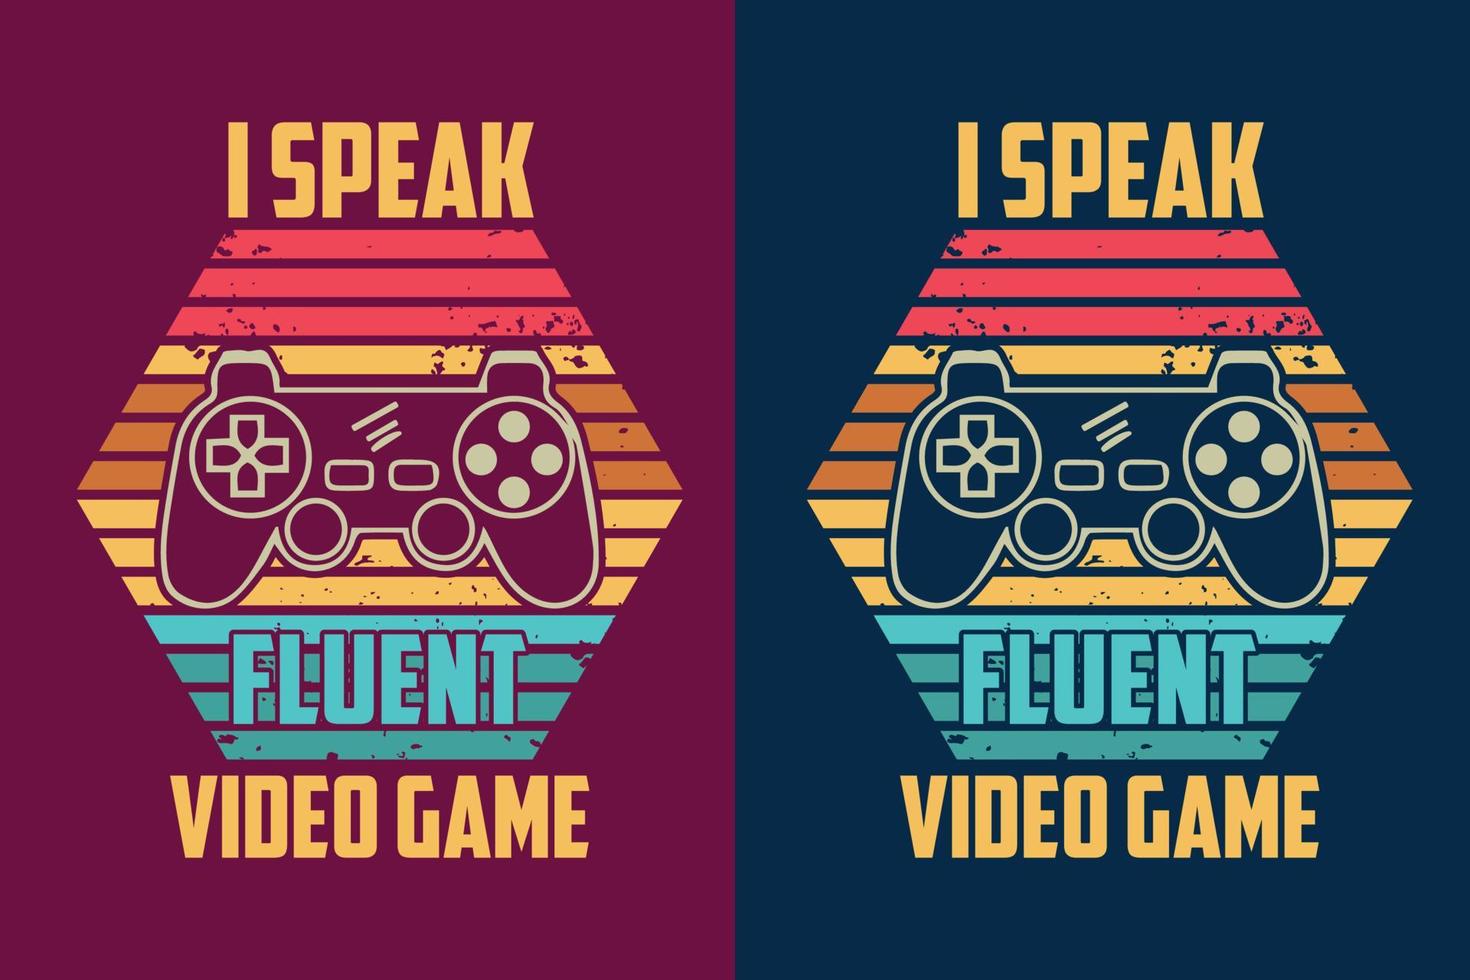 ik spreek vloeiend video game typografie vintage retro vorm met joypad gaming t-shirt design vector